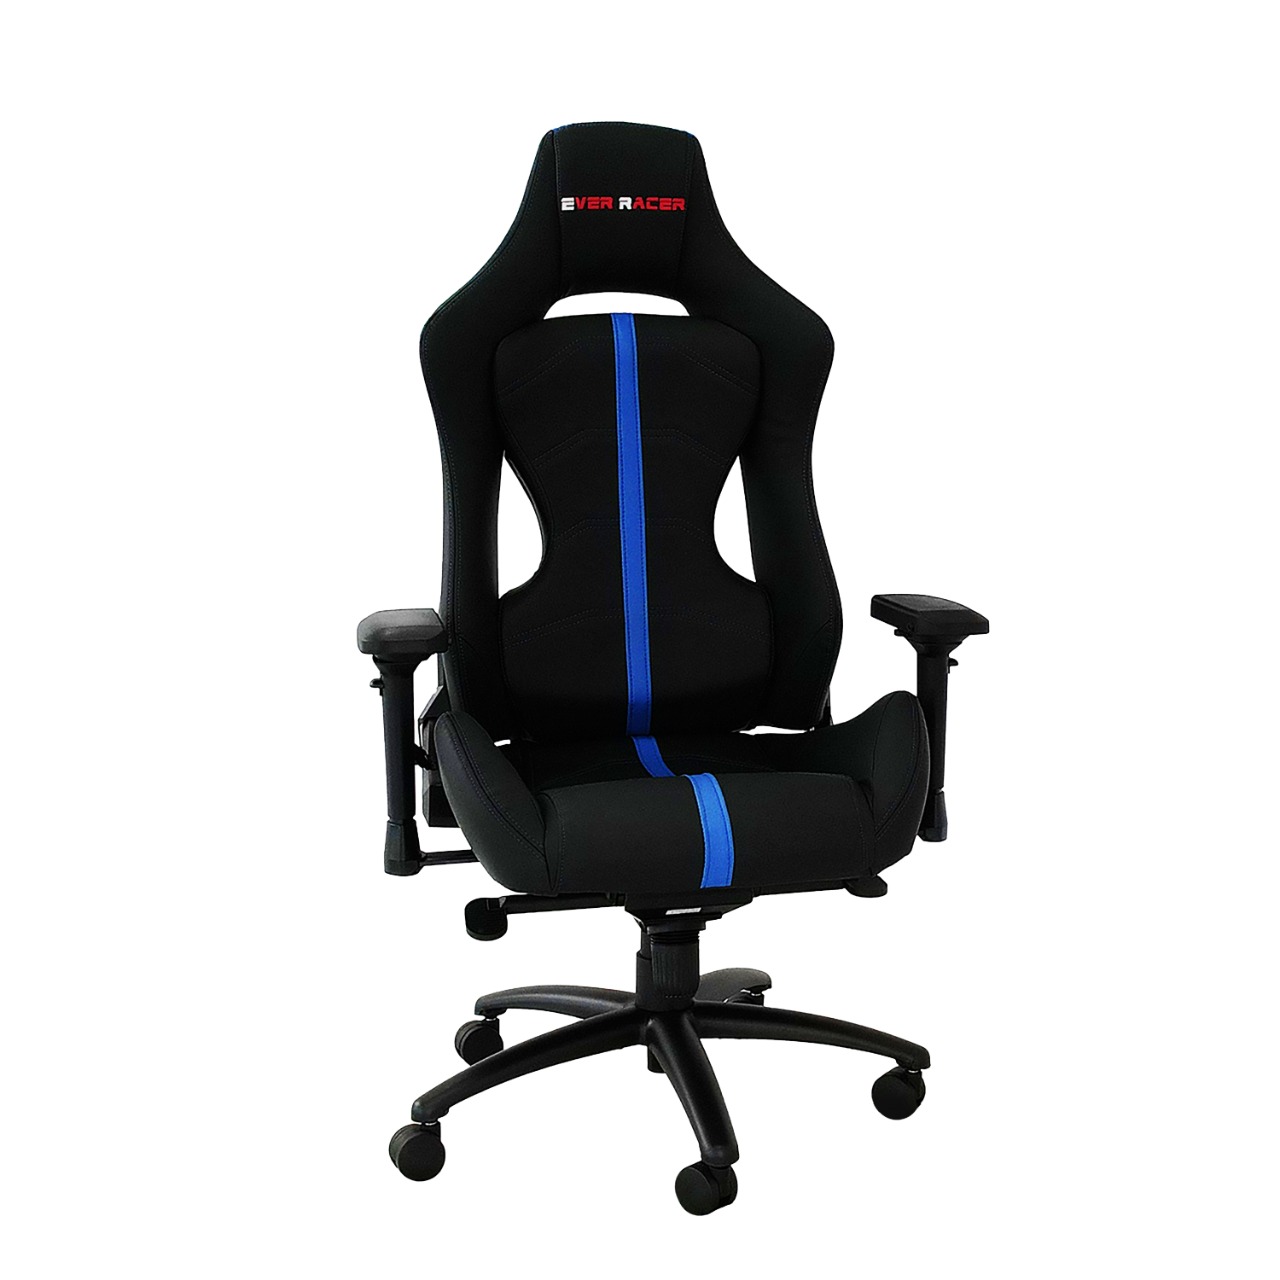 EverRacer Alpha Black & Blue Gaming Chair